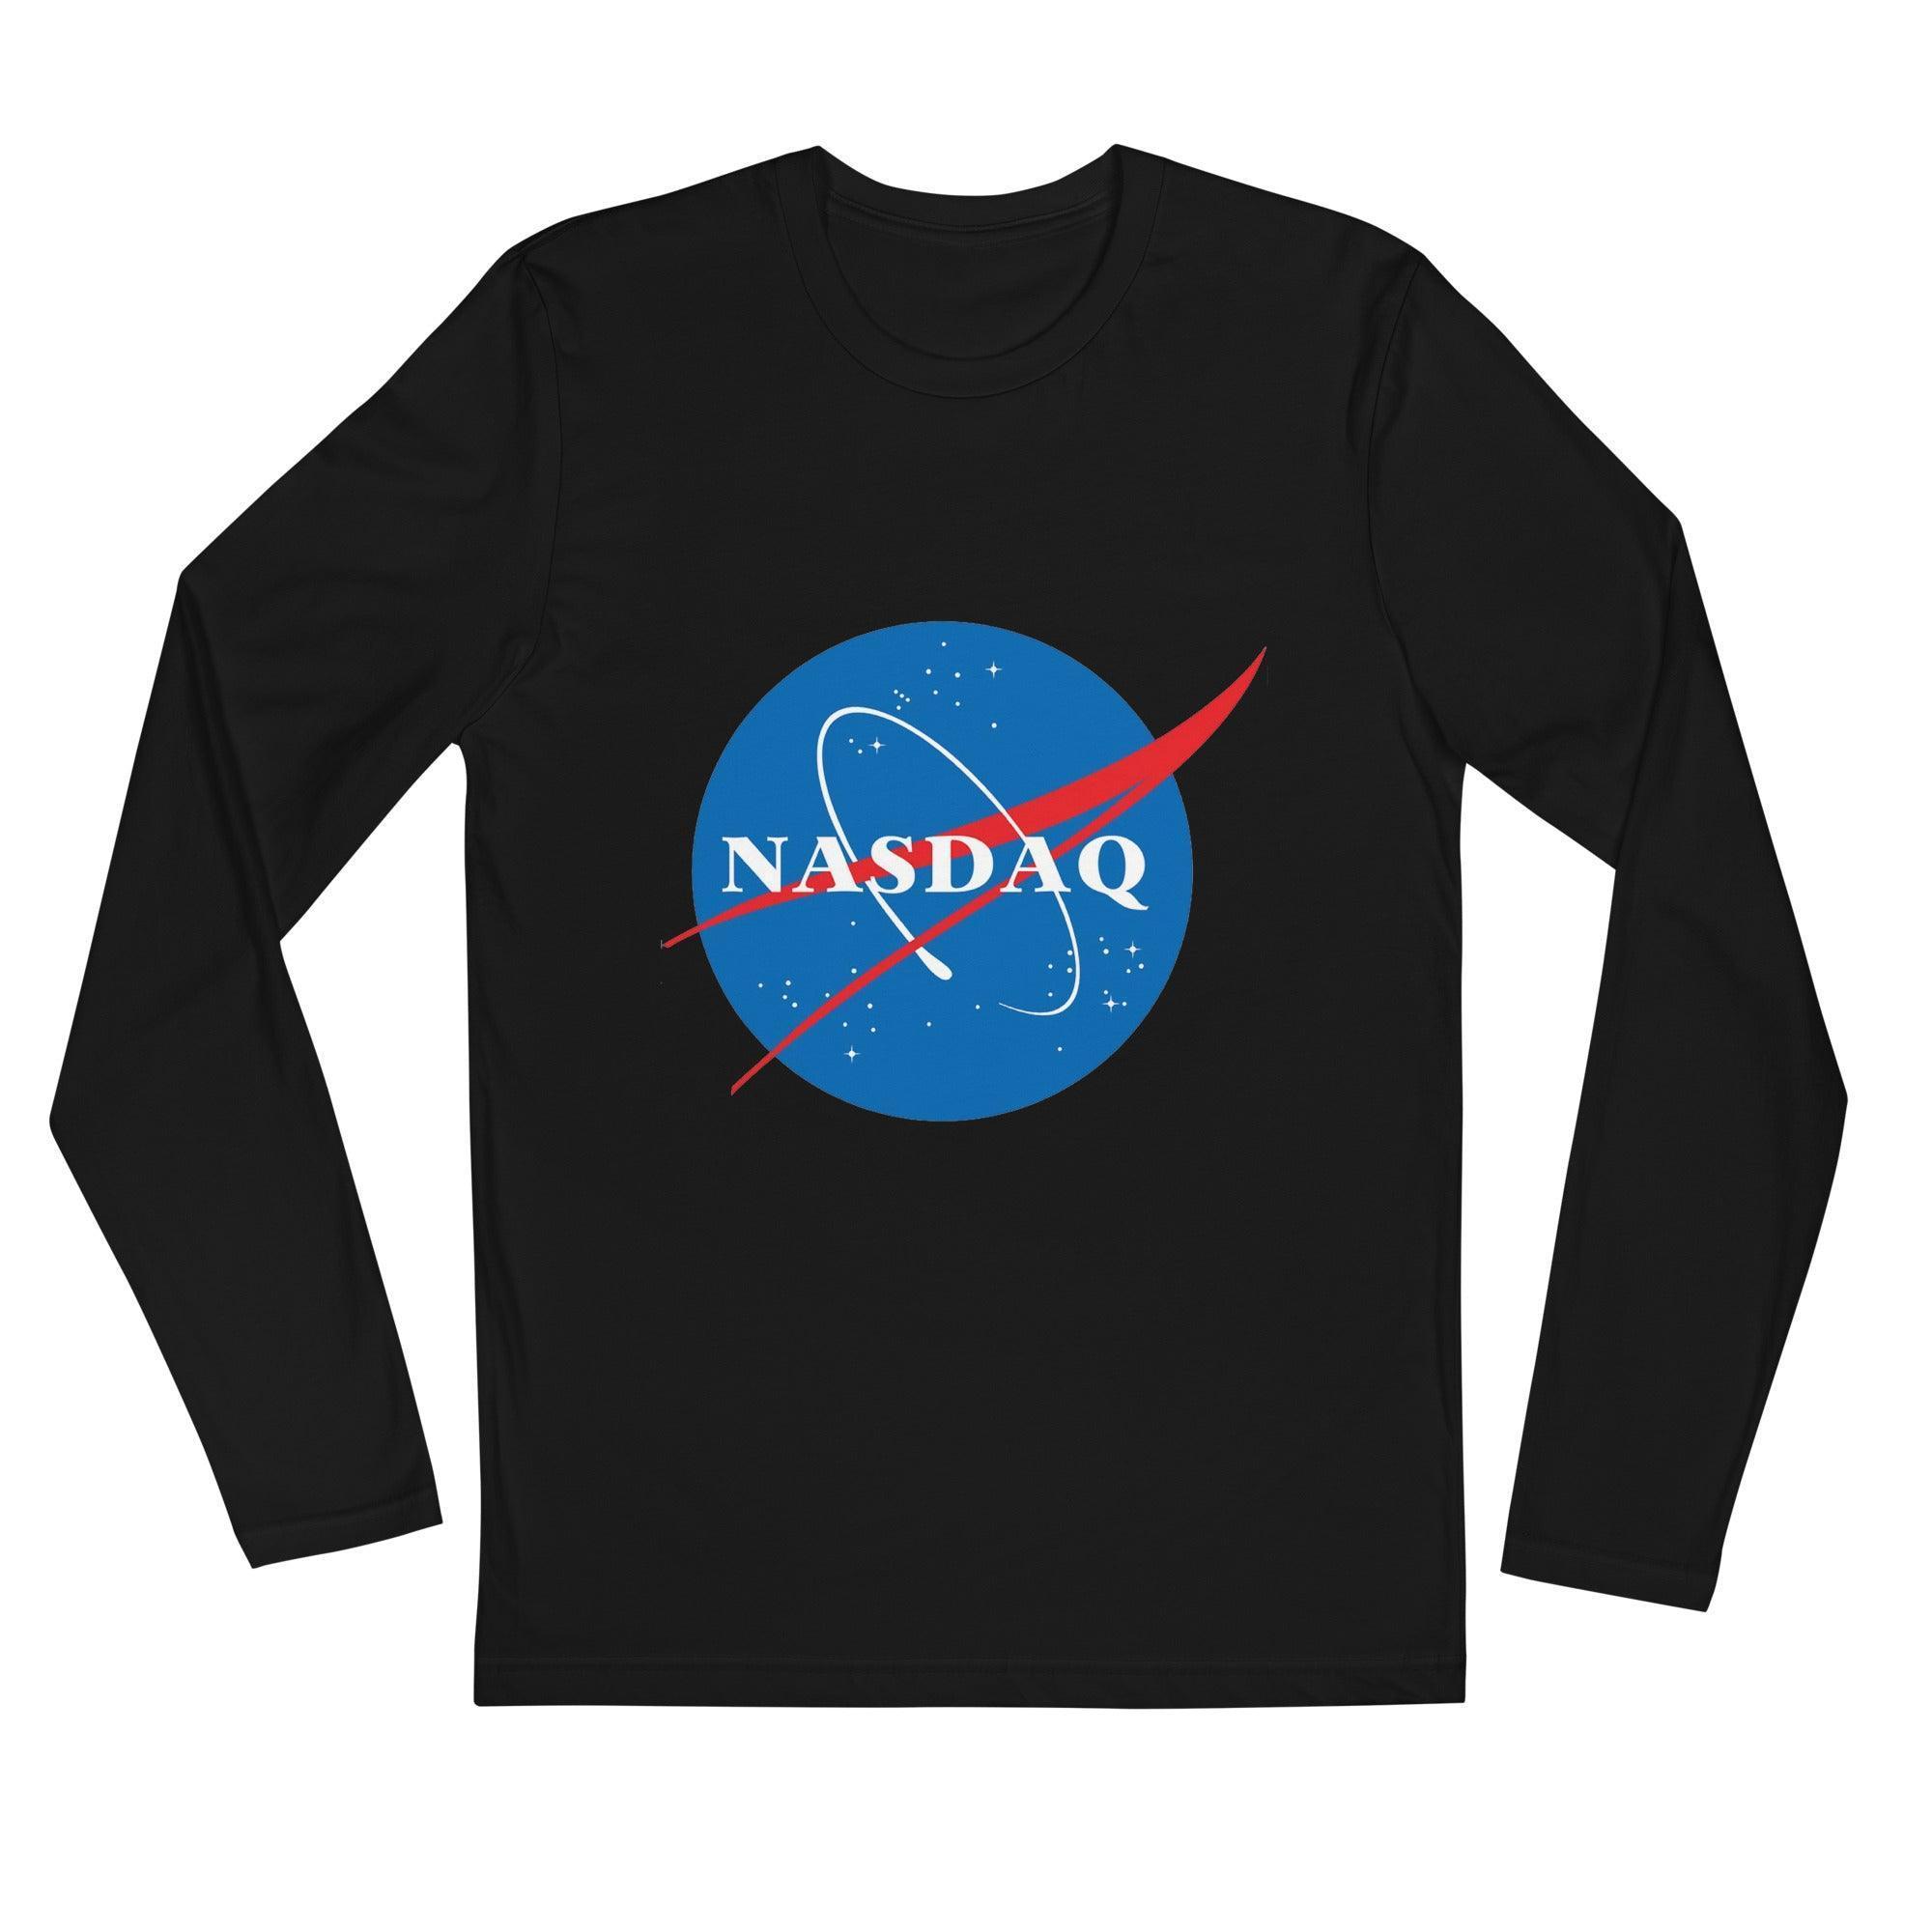 Nasdaq to the Moon Long Sleeve T-Shirt - InvestmenTees